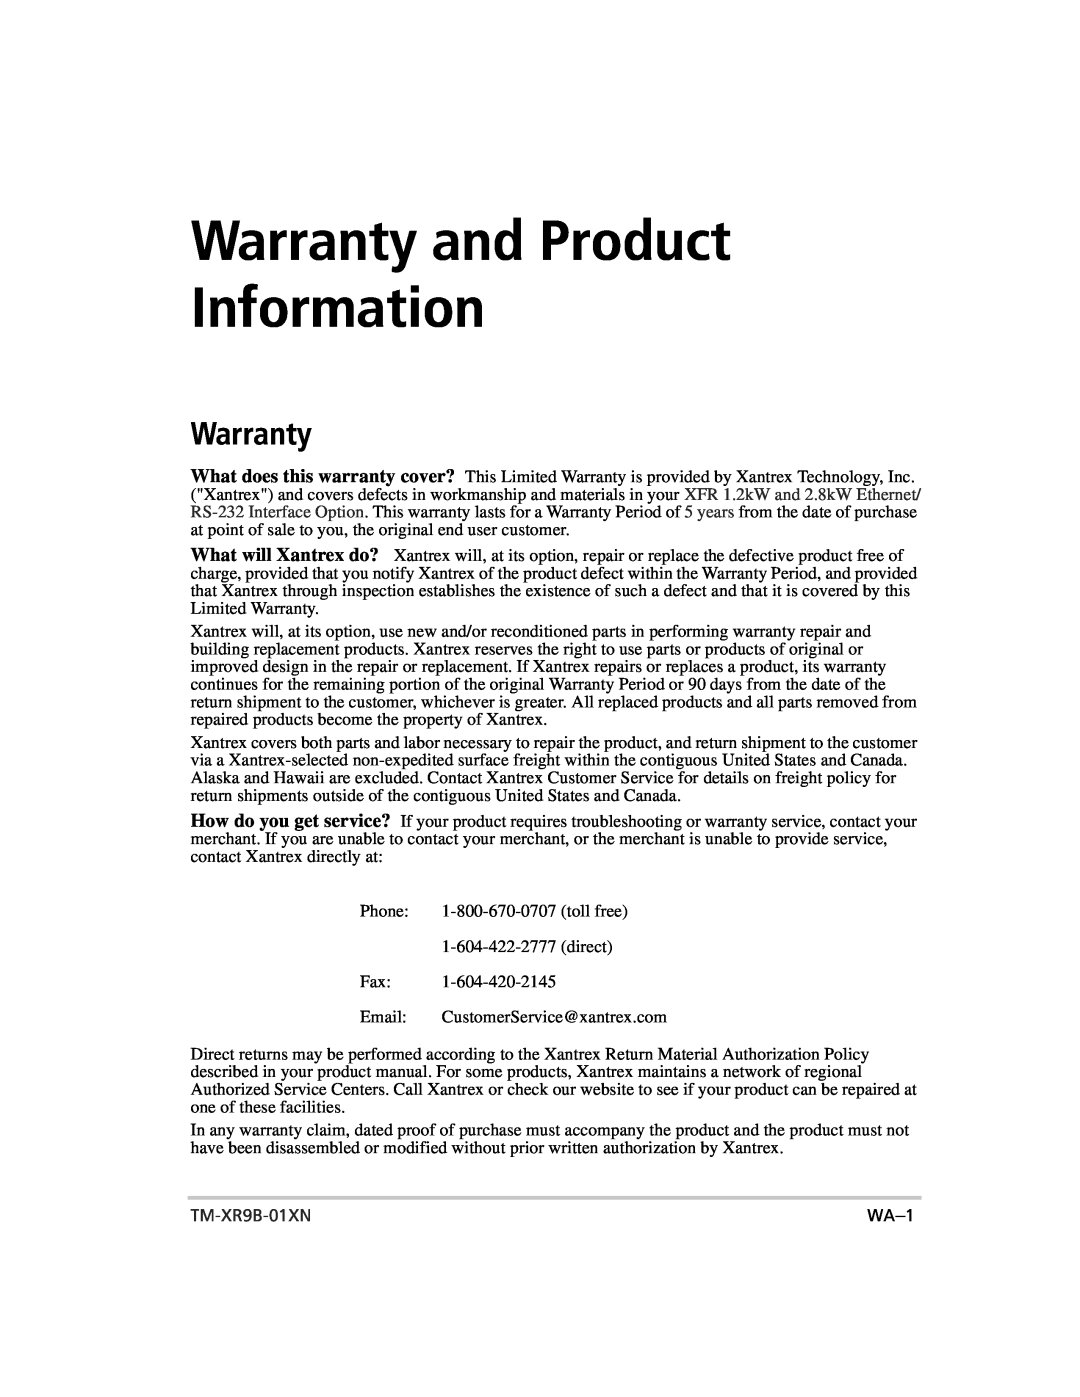 Xantrex Technology ENET-XFR3 manual Warranty and Product Information, TM-XR9B-01XN, WA-1 